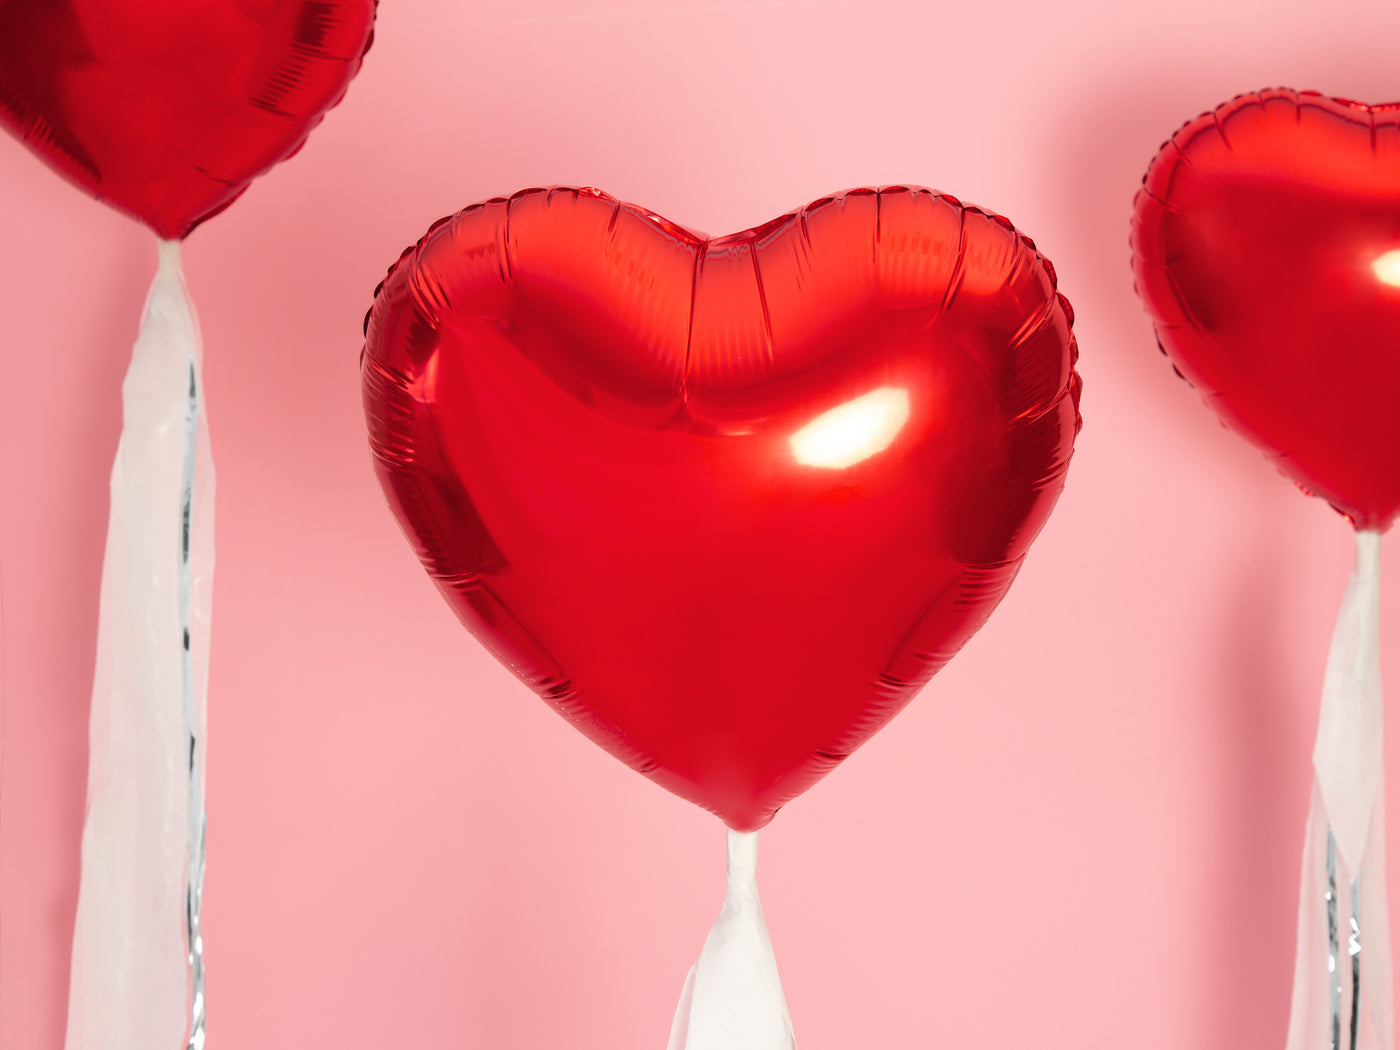 Heart Foil Balloon, red